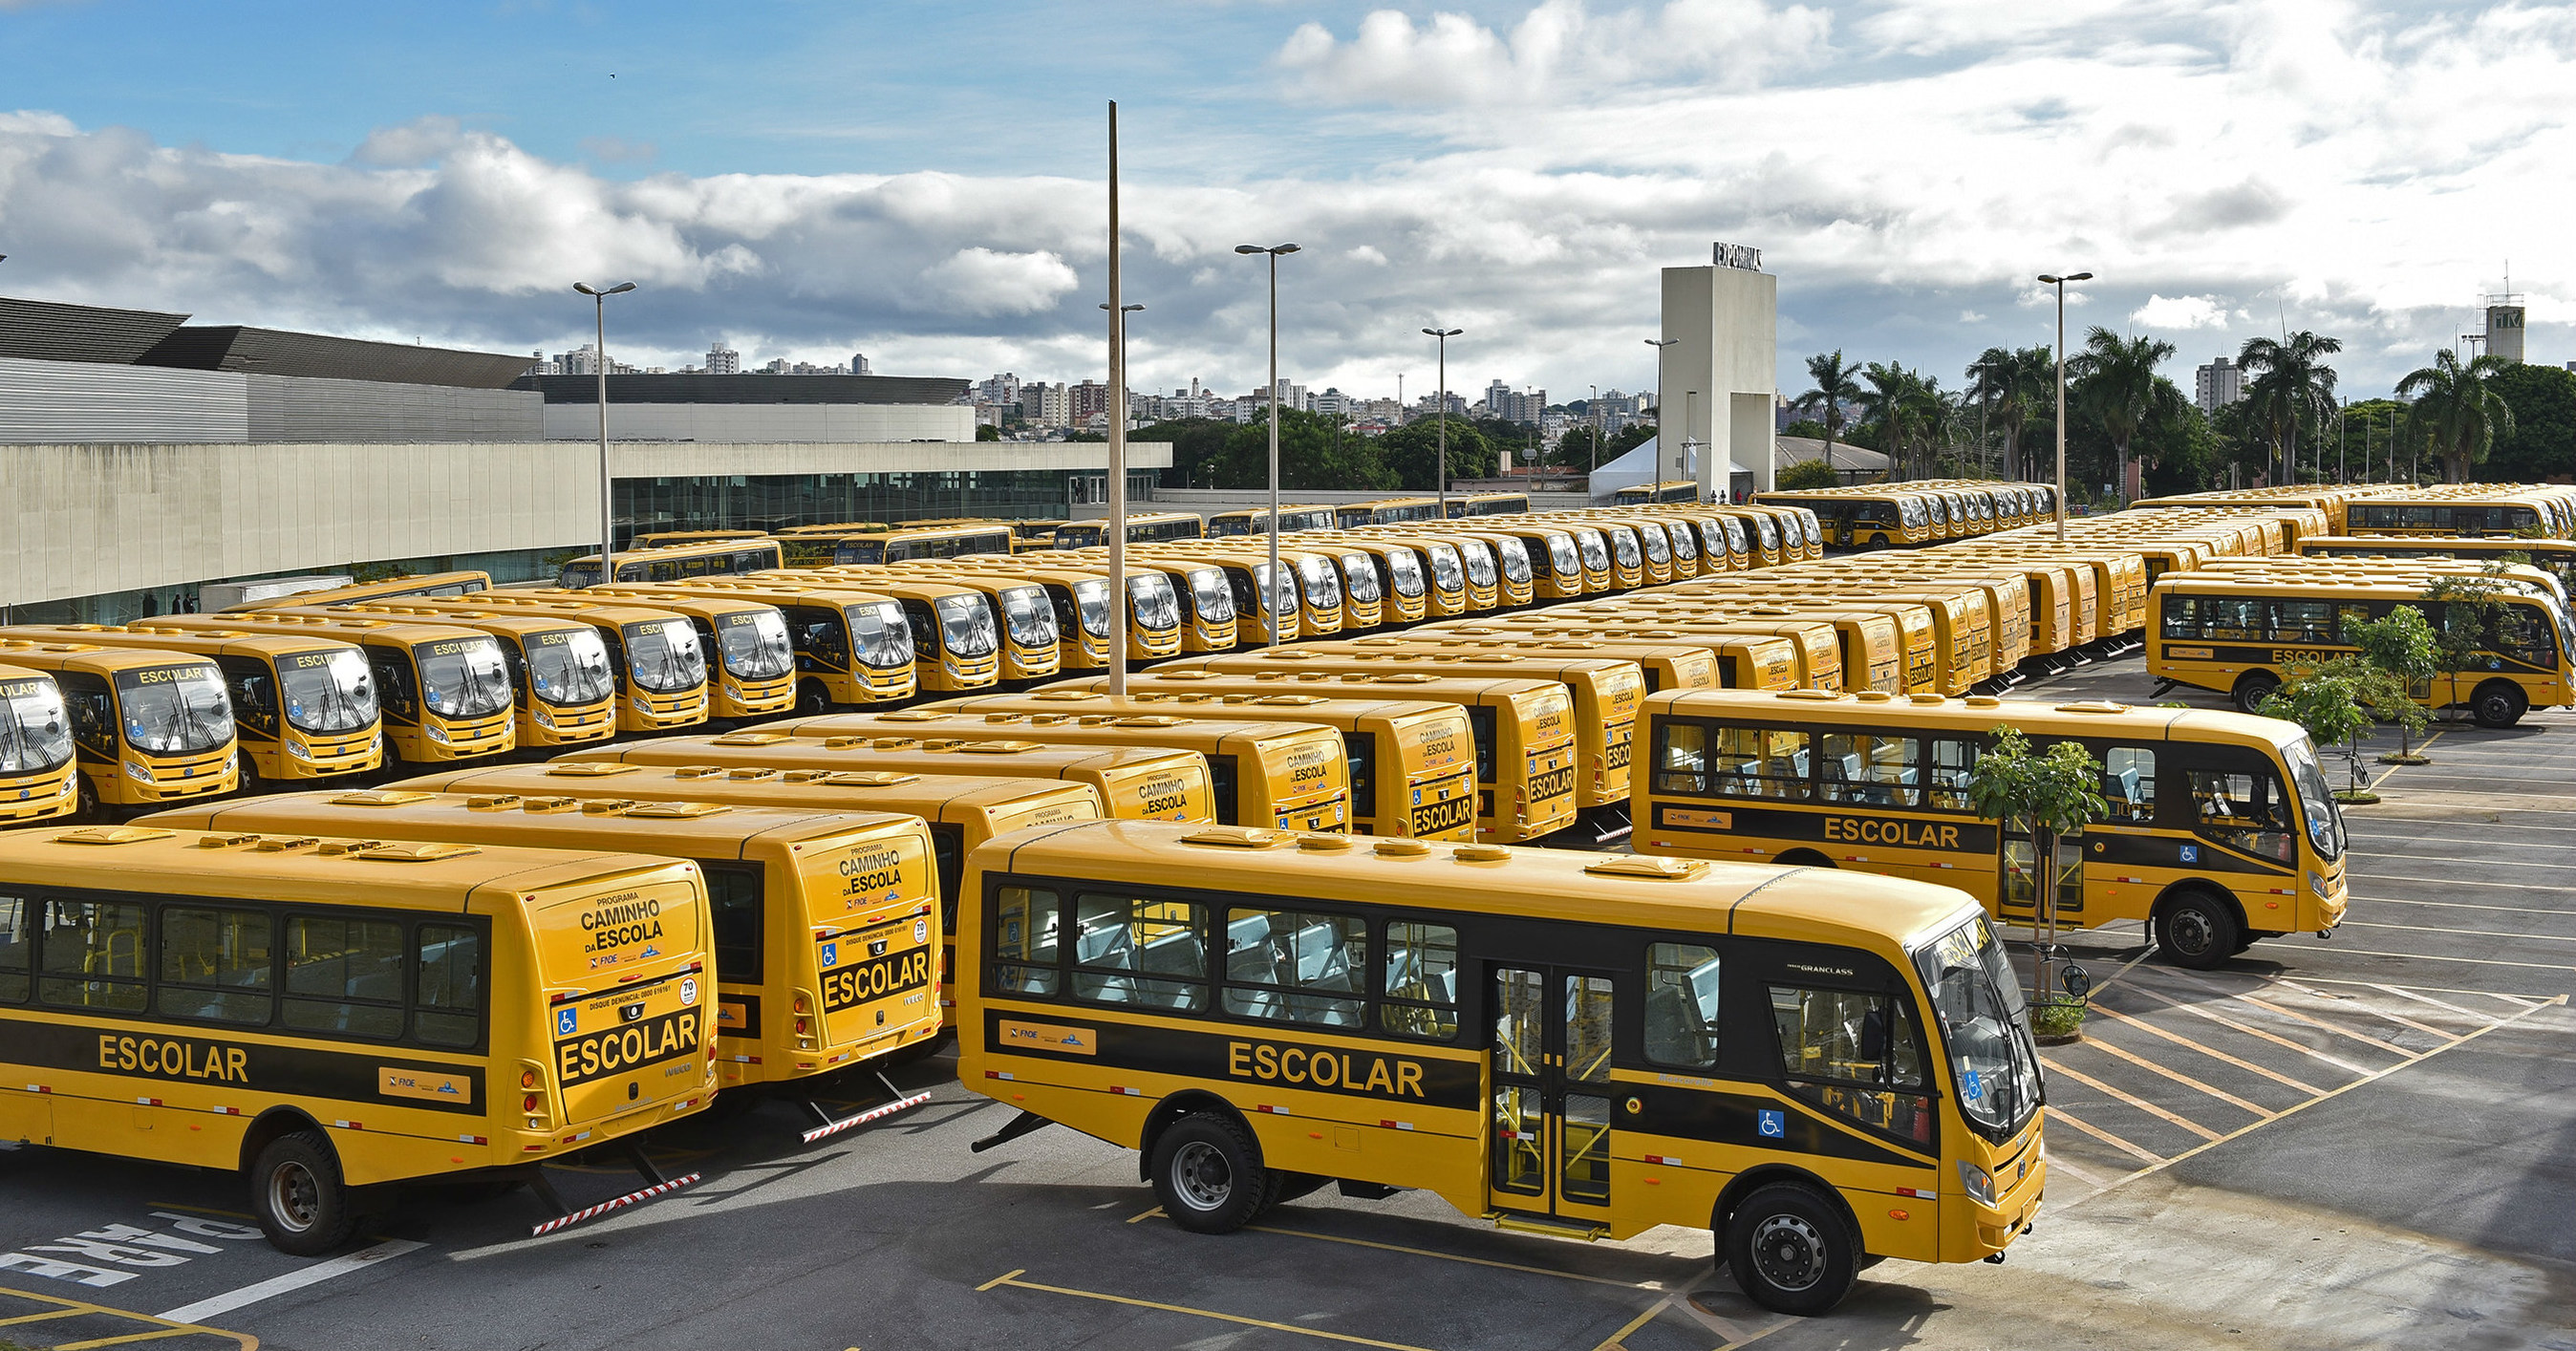 IVECO BUS entrega en Minas Gerais, Brasil, 628 autobuses ... - PR Newswire (Comunicado de prensa)